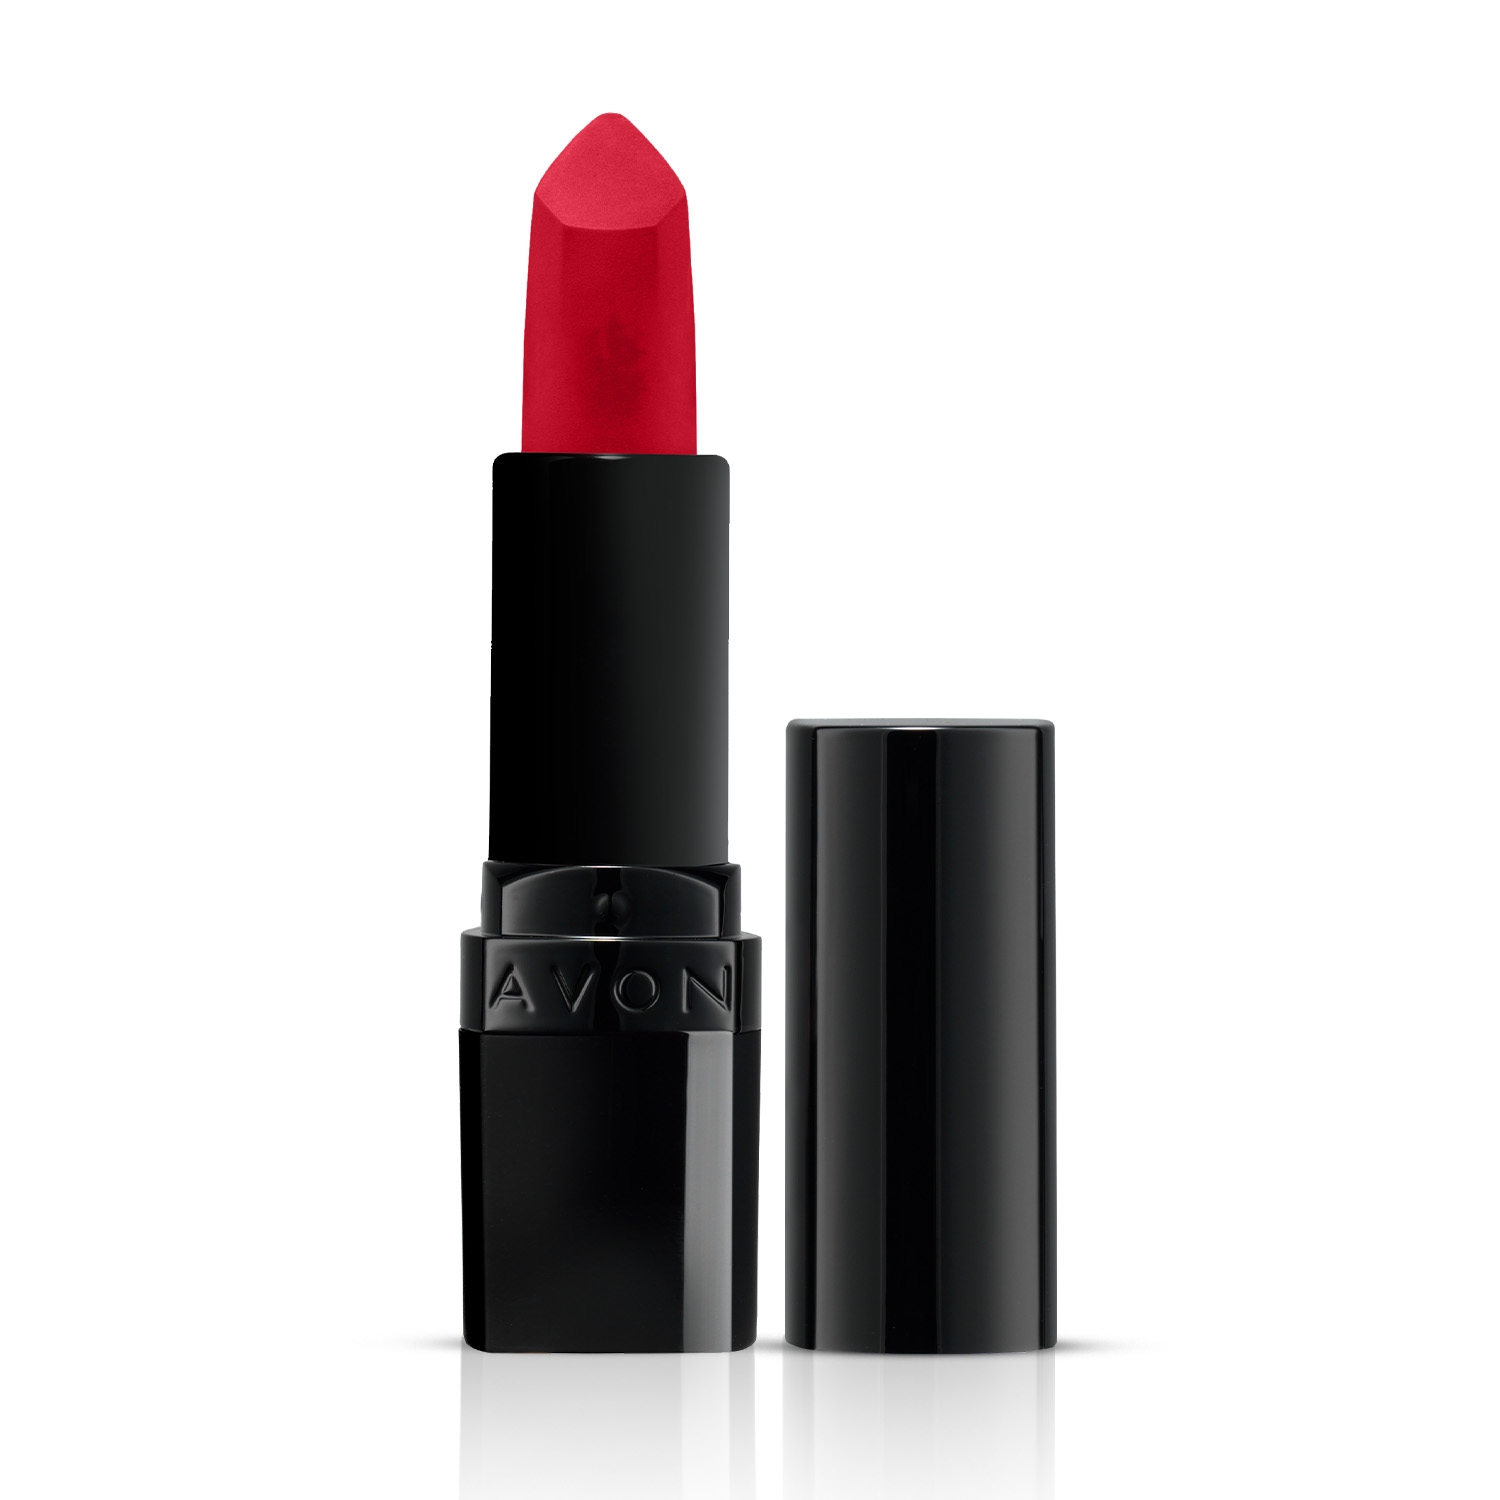 Avon | Avon Ultra Perfectly Matte Lipstick - Ruby Kiss (4g)